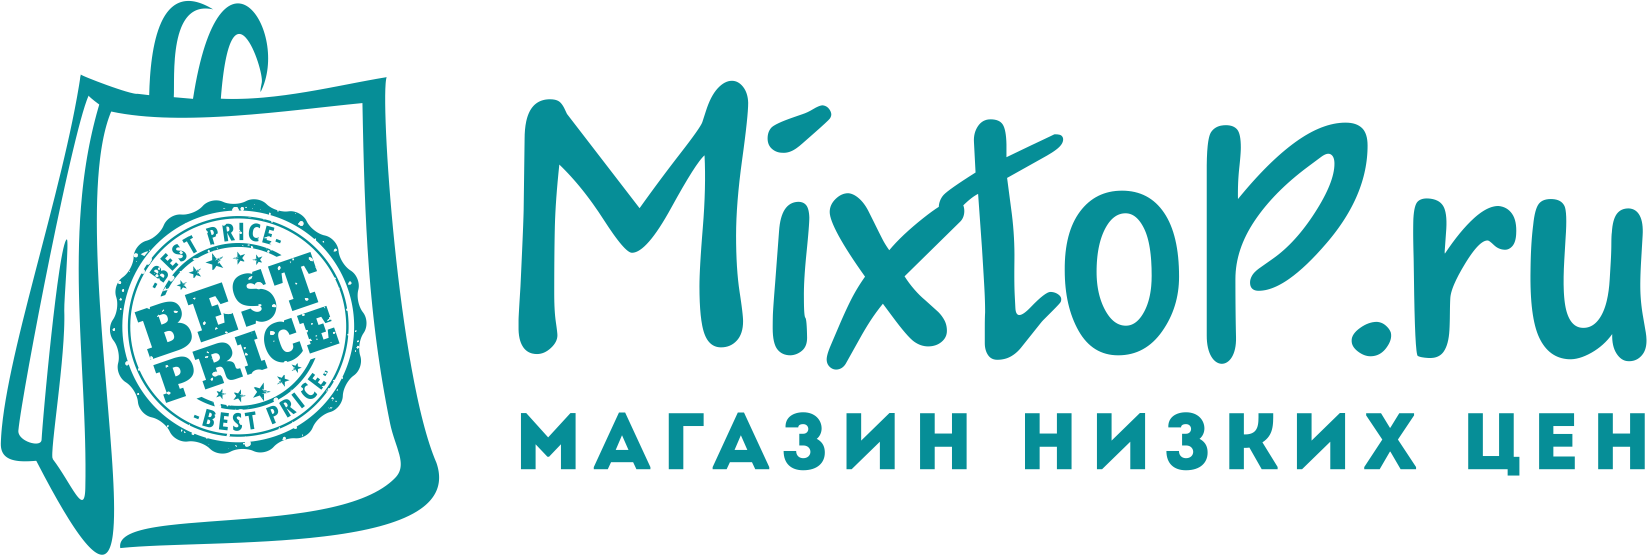 Mixtor Ru Магазин Низких Цен